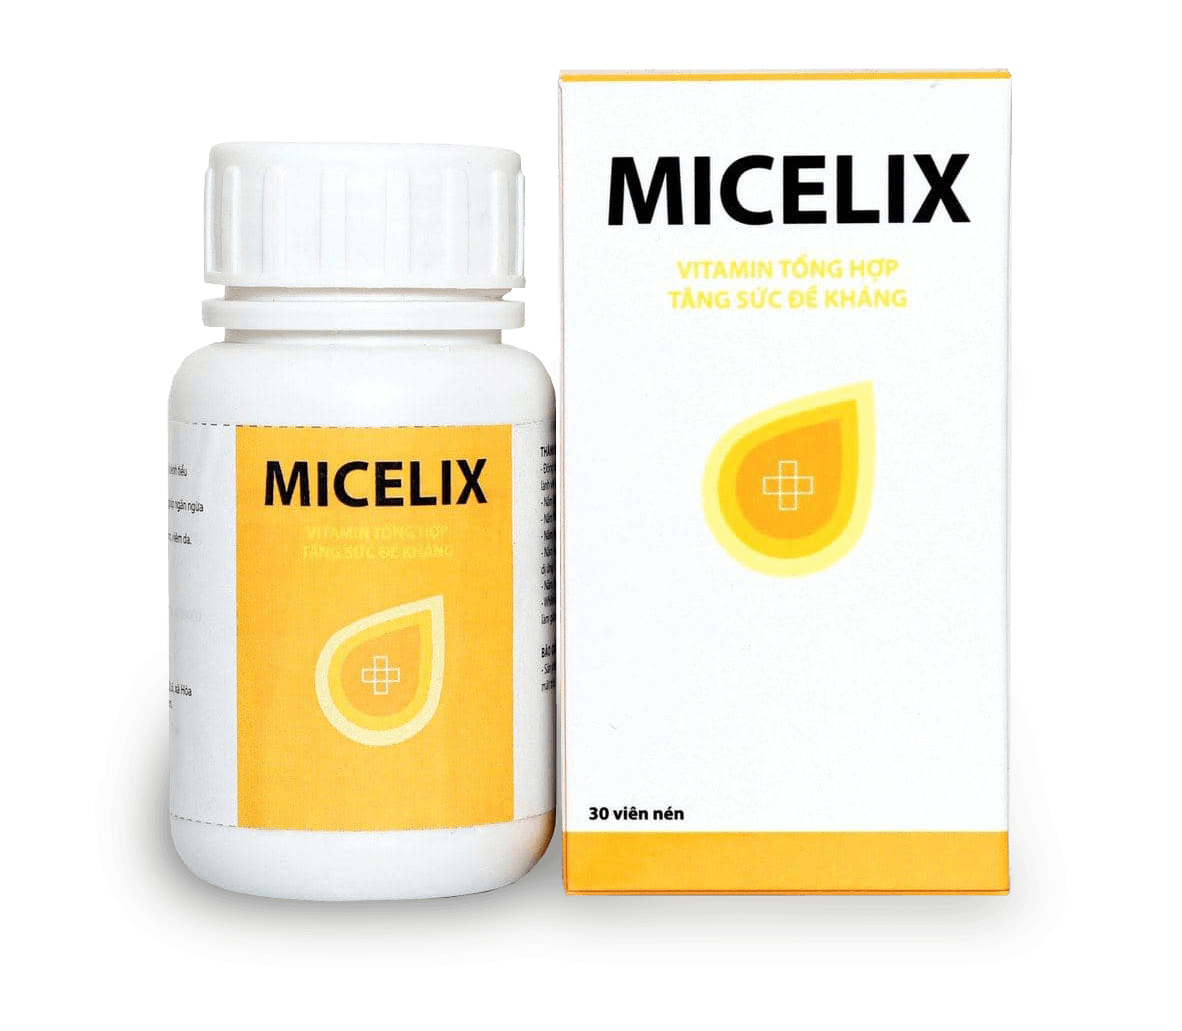 Micelix Customer Reviews